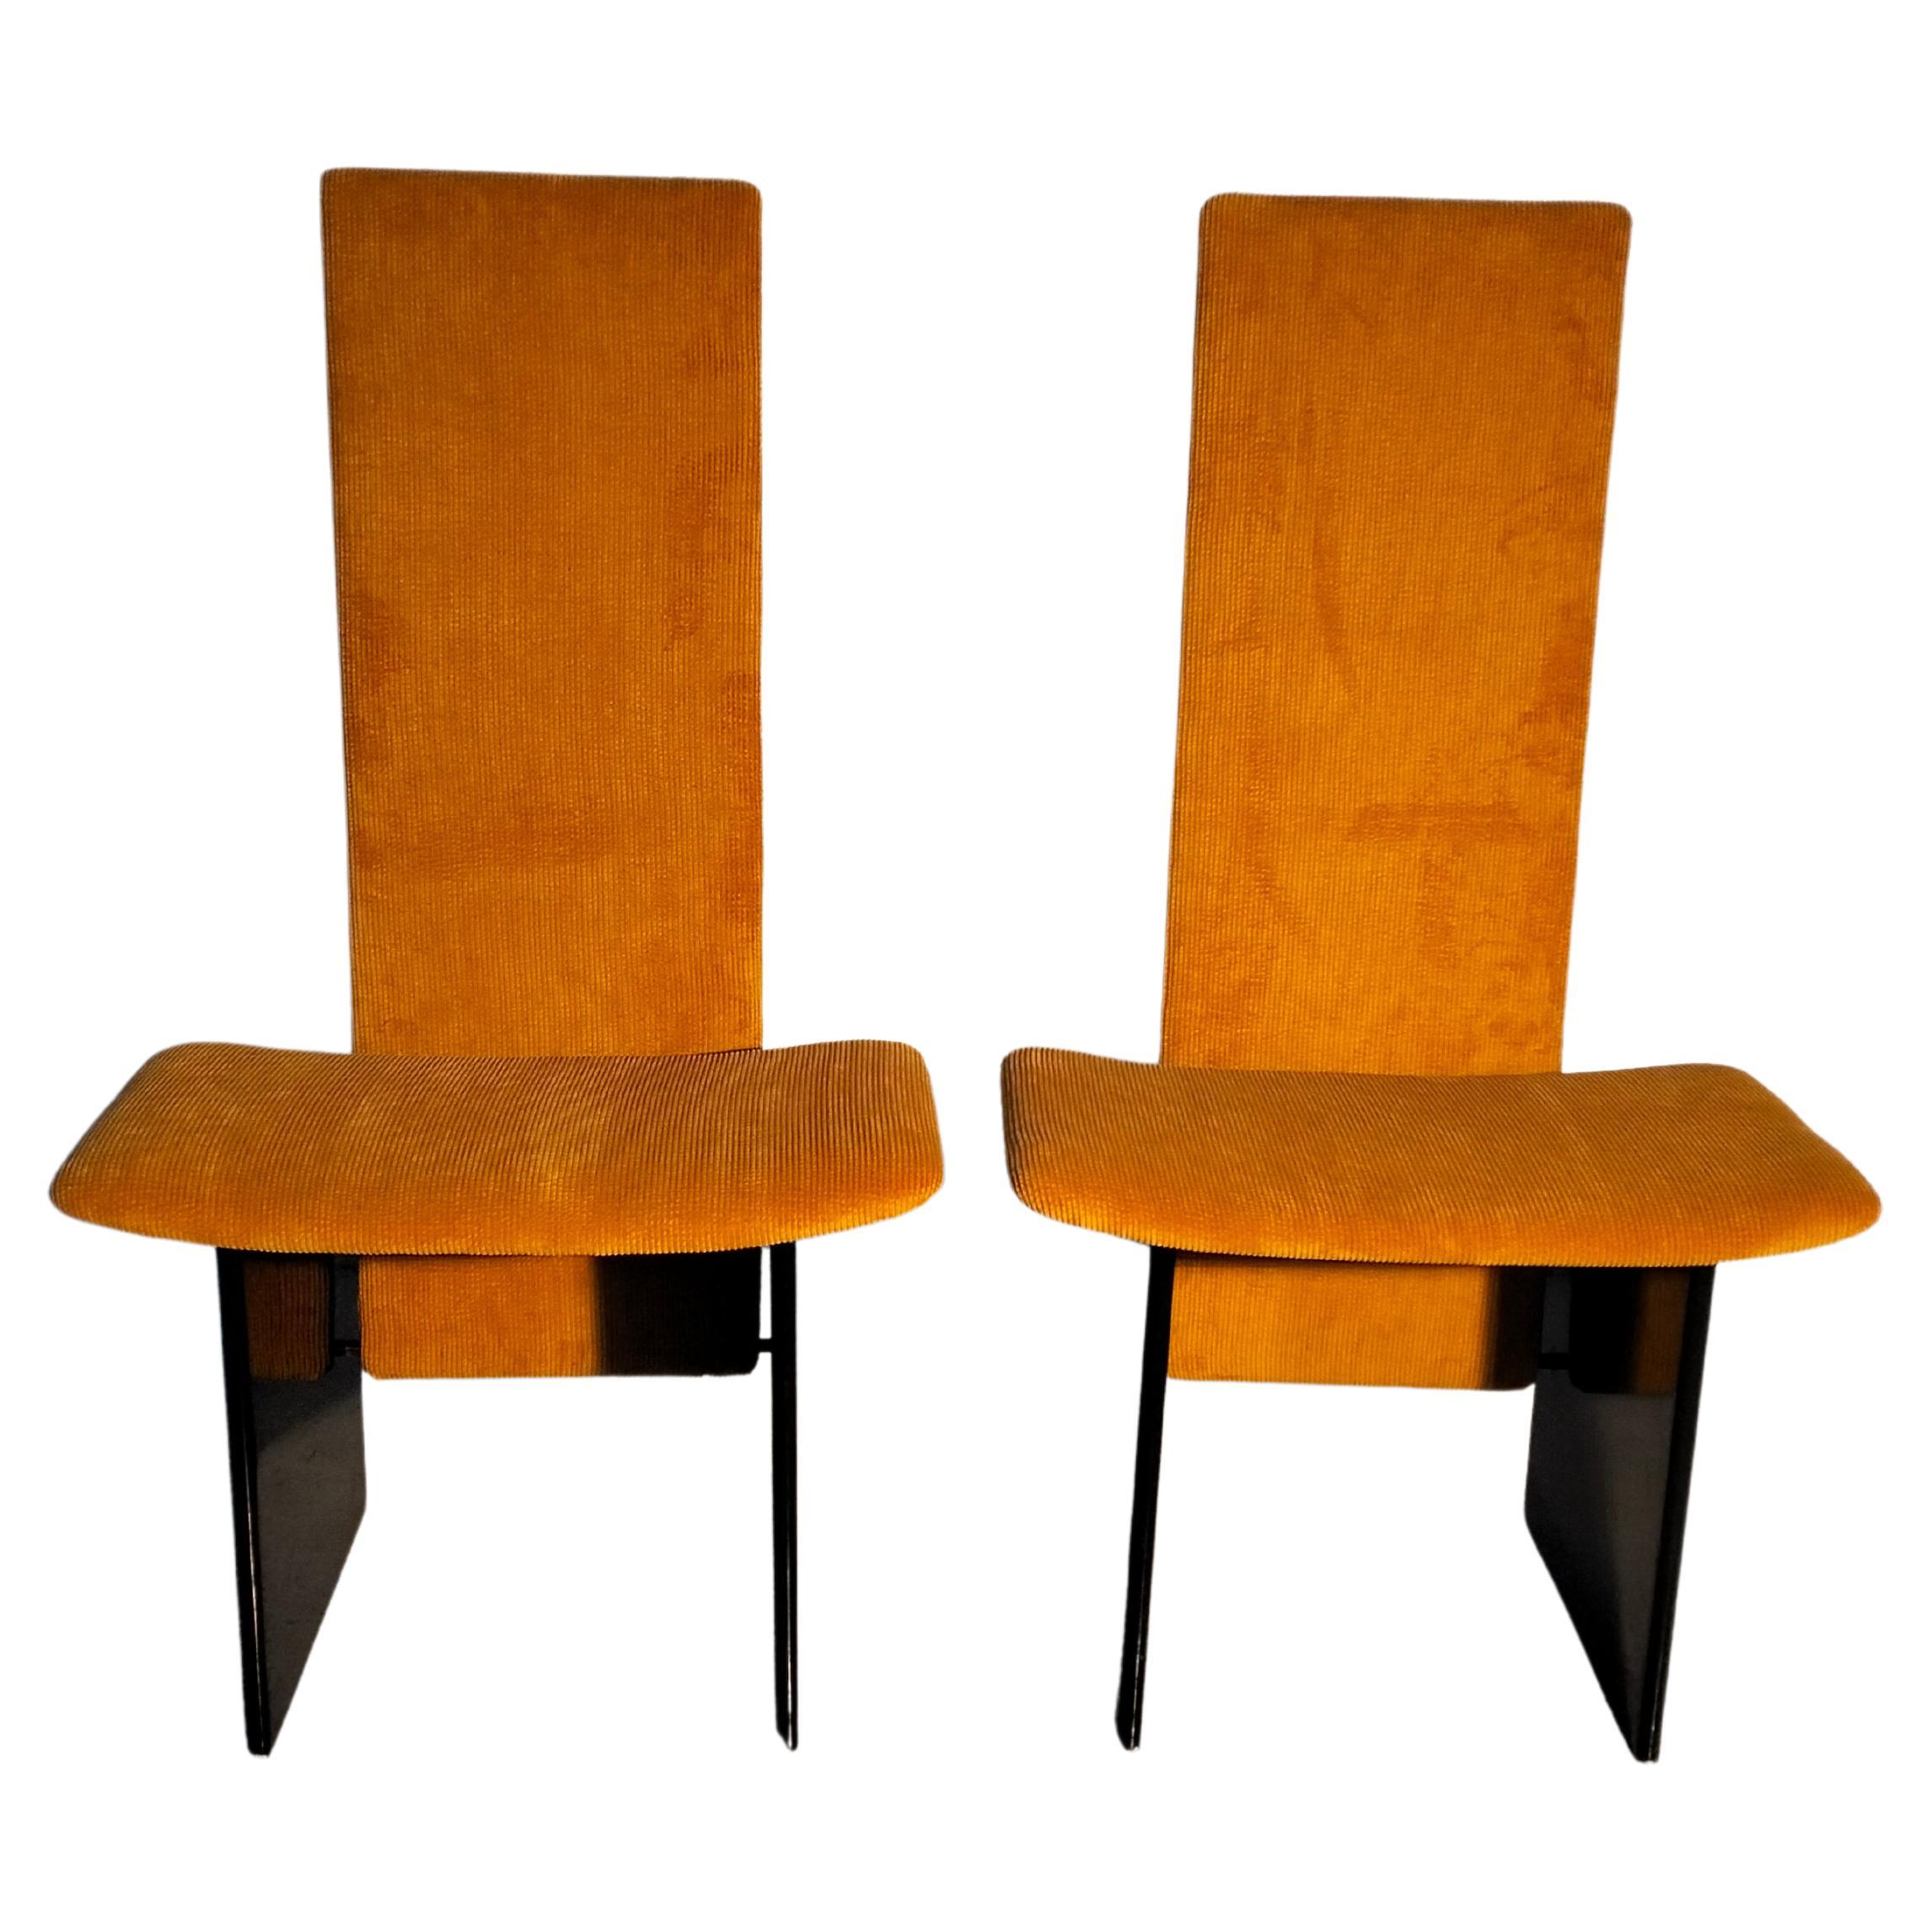 Set of 2 ocra yellow chairs Rennie mod. by K. Takahama for S. Gavina 70's, Italy